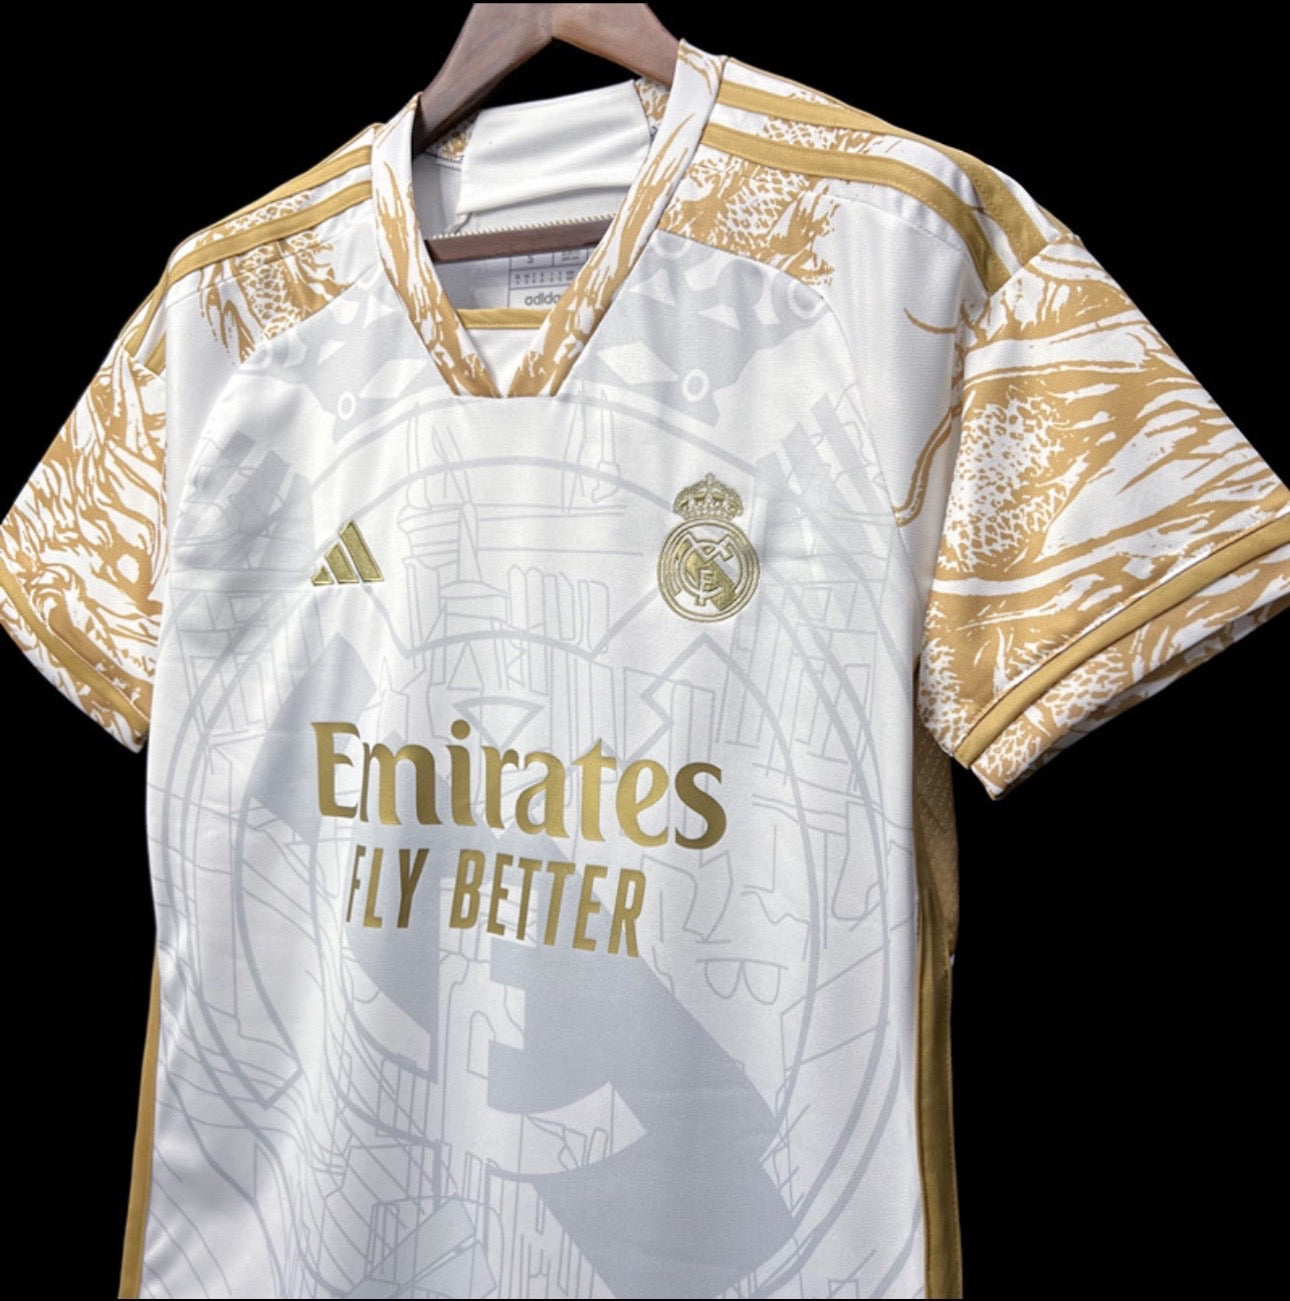 Real Madrid Special edition: Platinum